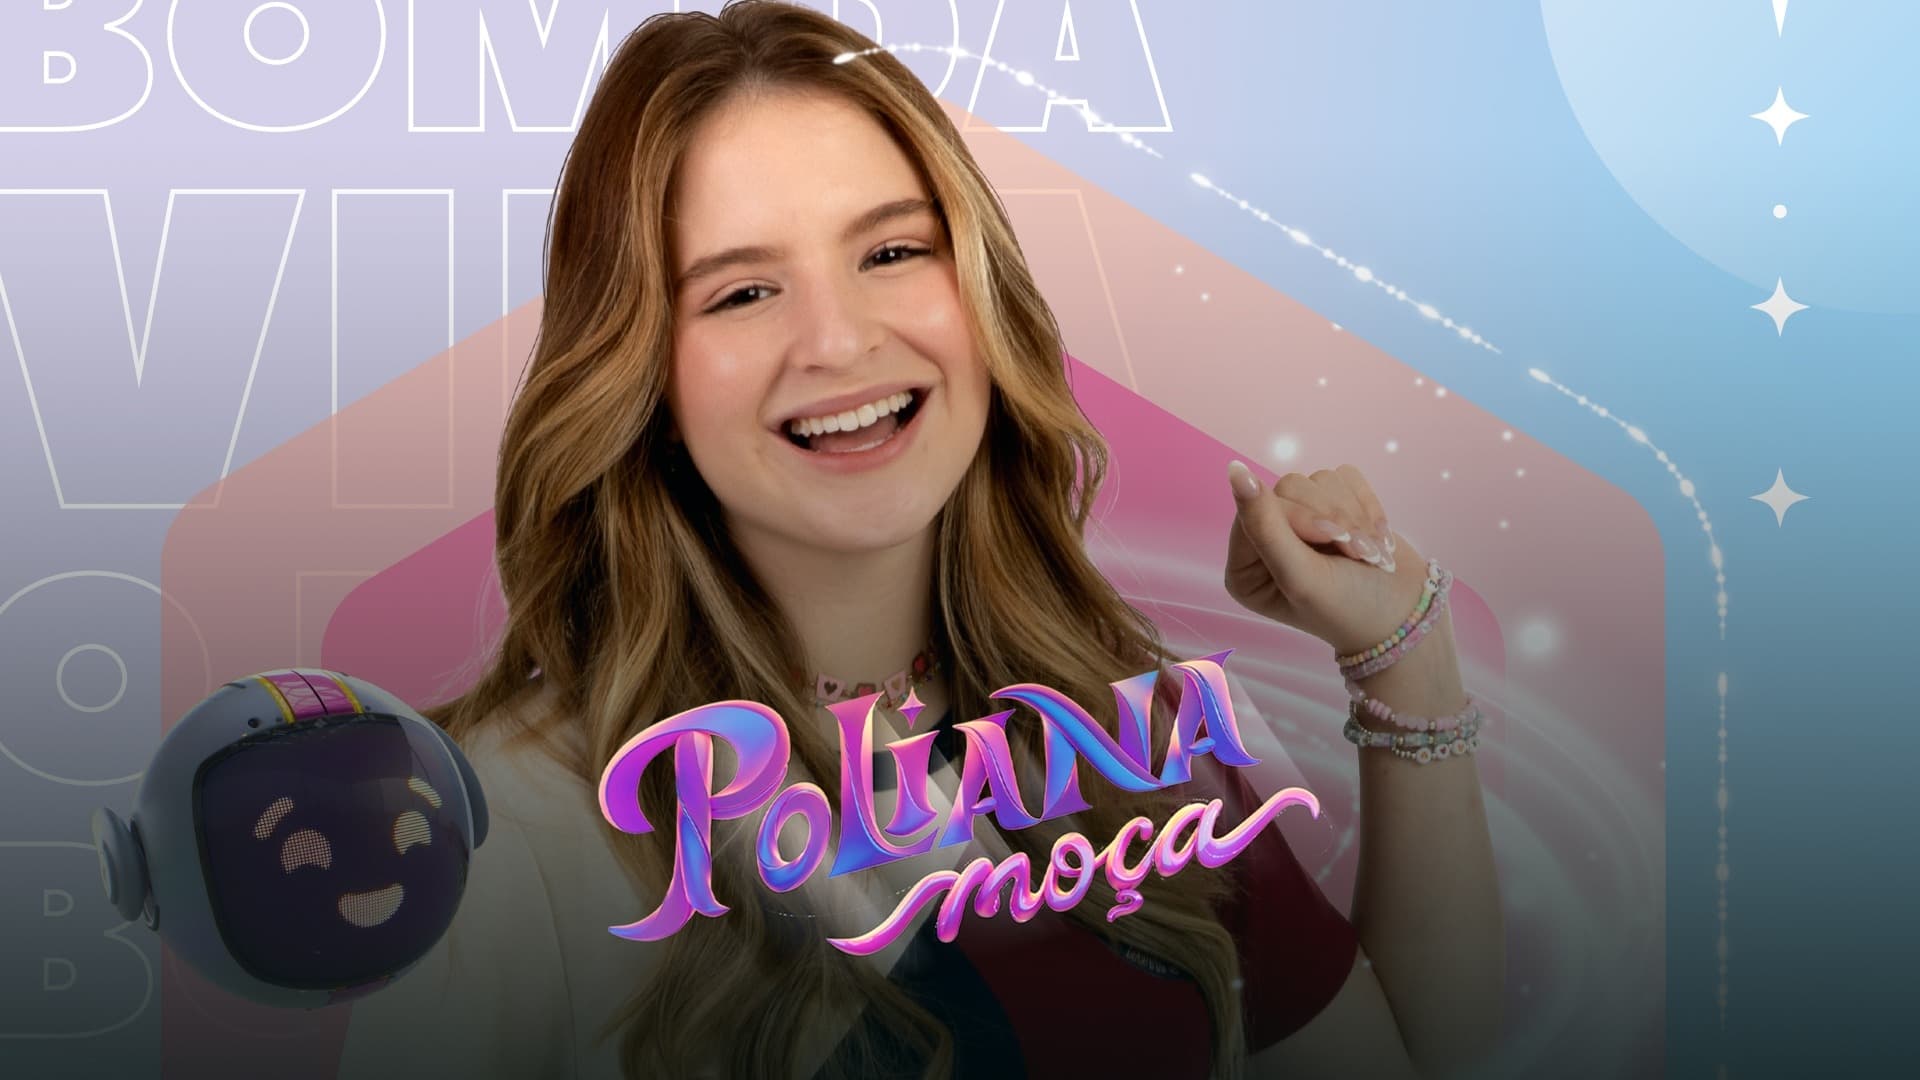 Poliana Moça - Season 1 Episode 1 : Episode 1